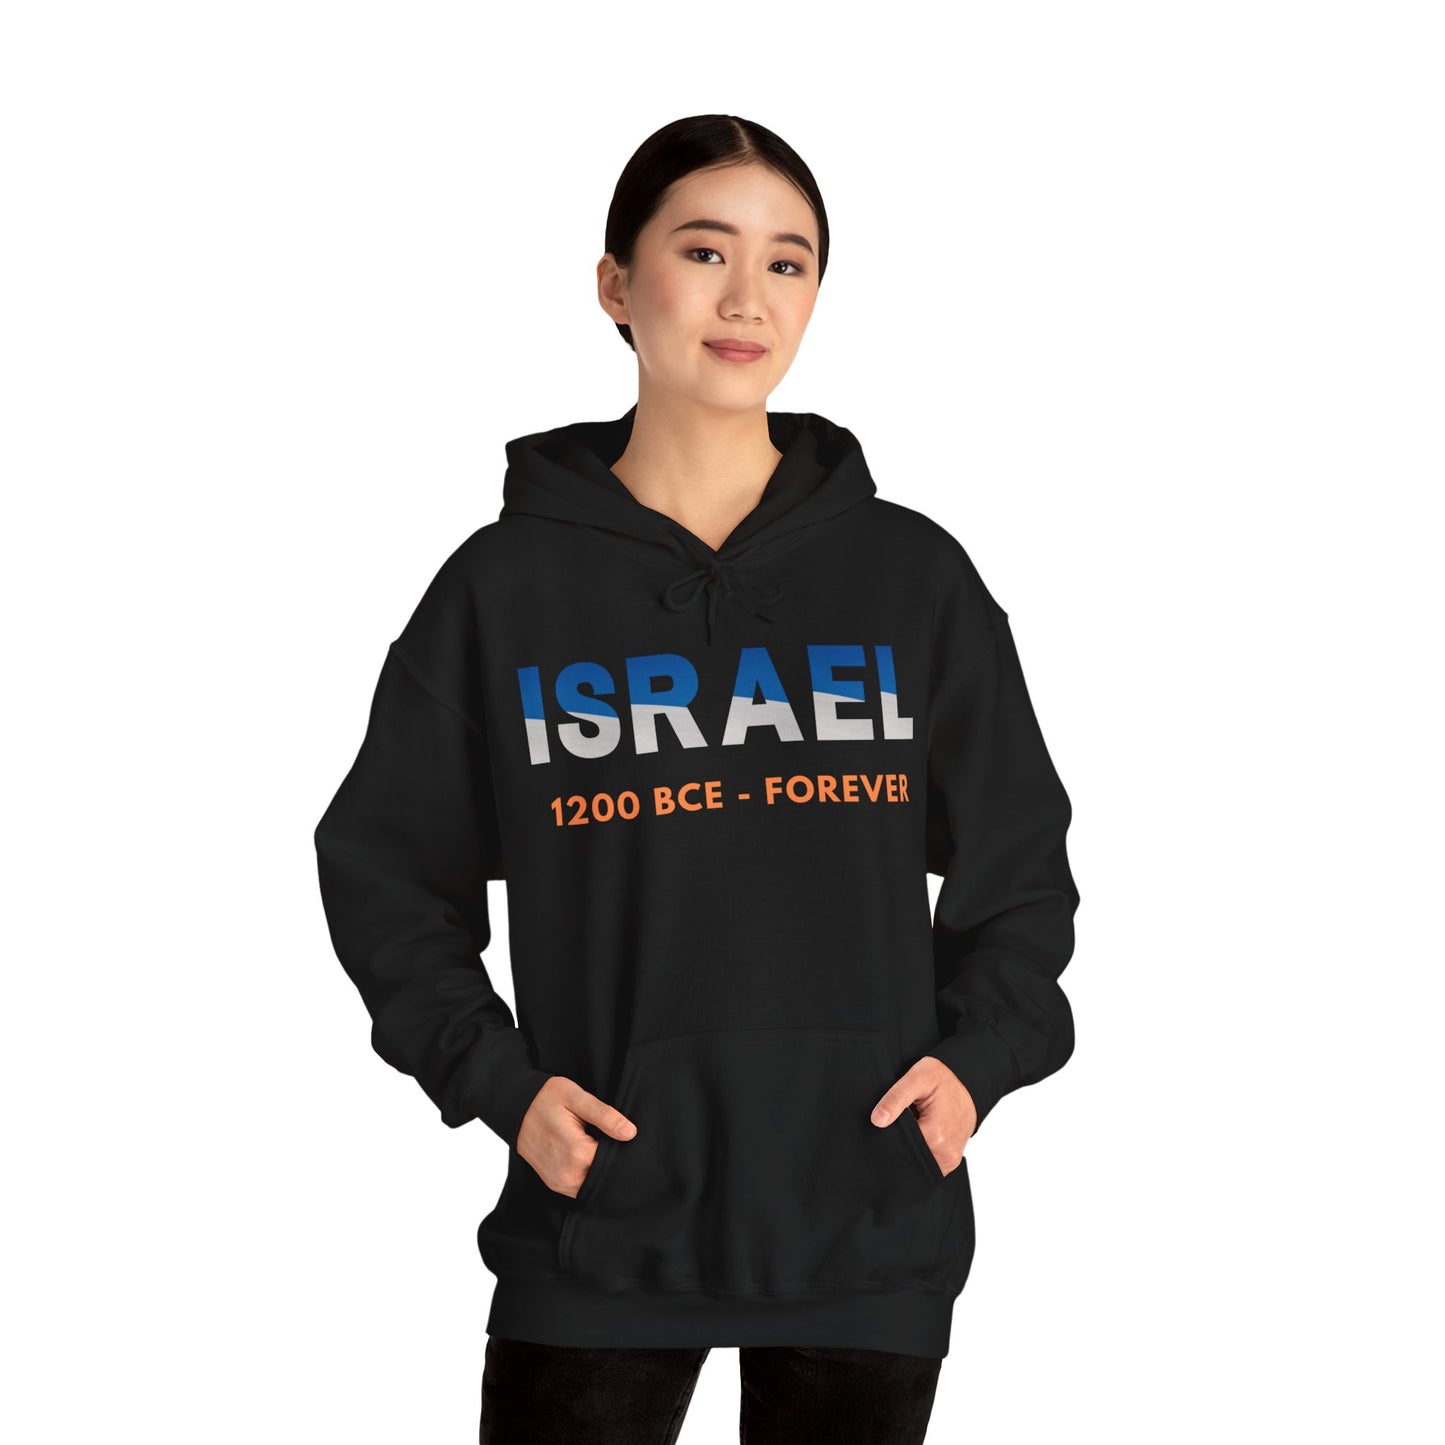 Israel 1200 BCE - Forever Unisex Hooded Sweatshirt